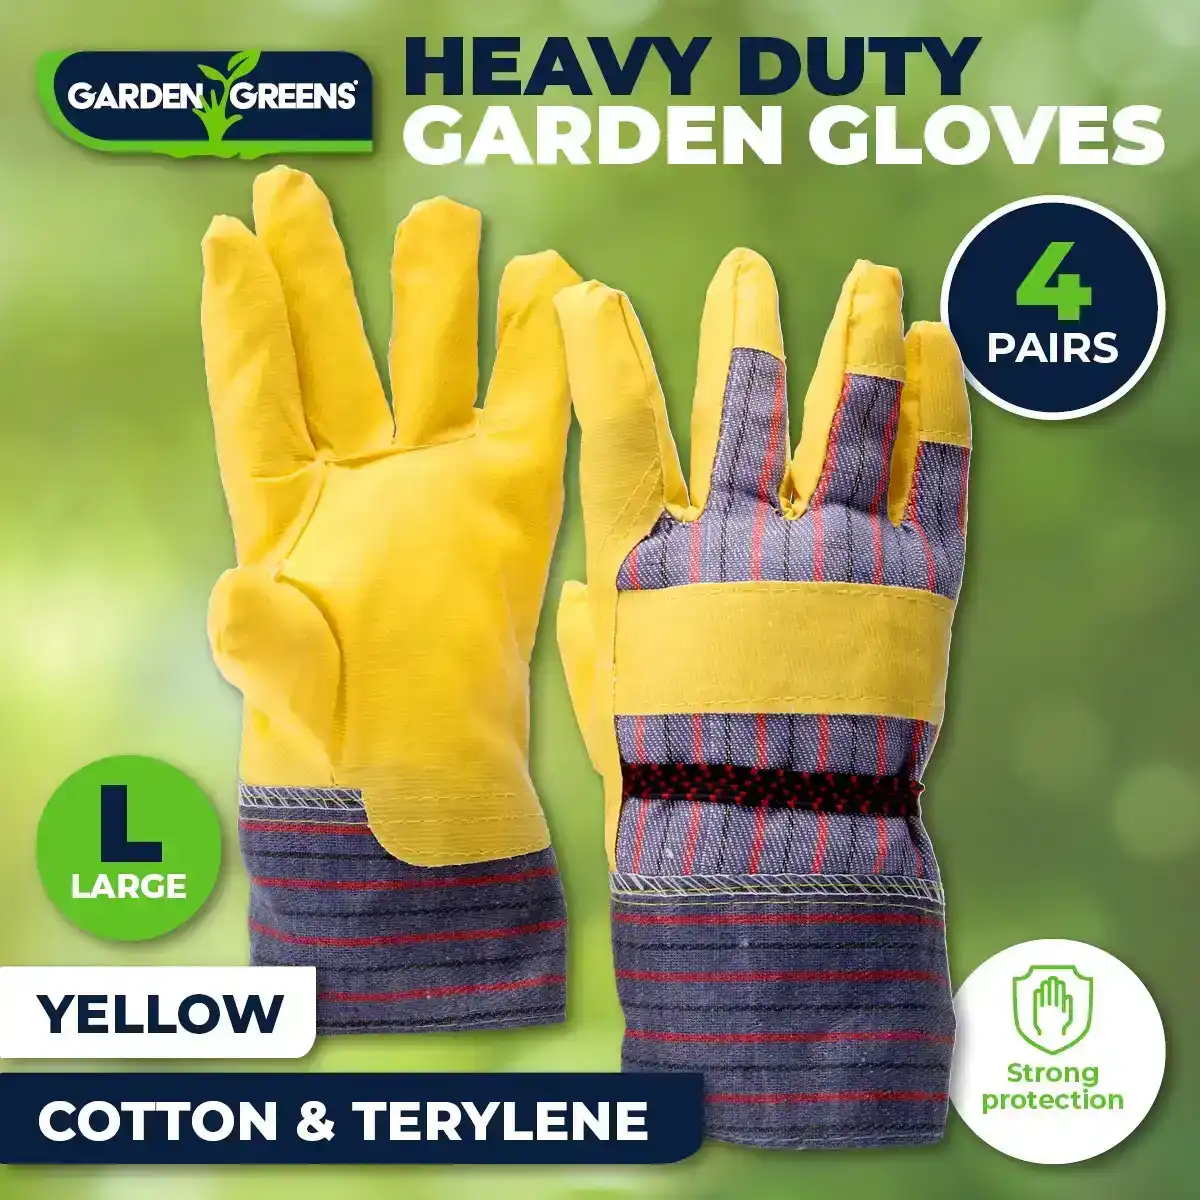 Garden Greens® 4PCE Garden Gloves Yellow Durable Cotton Comfortable Adult Size